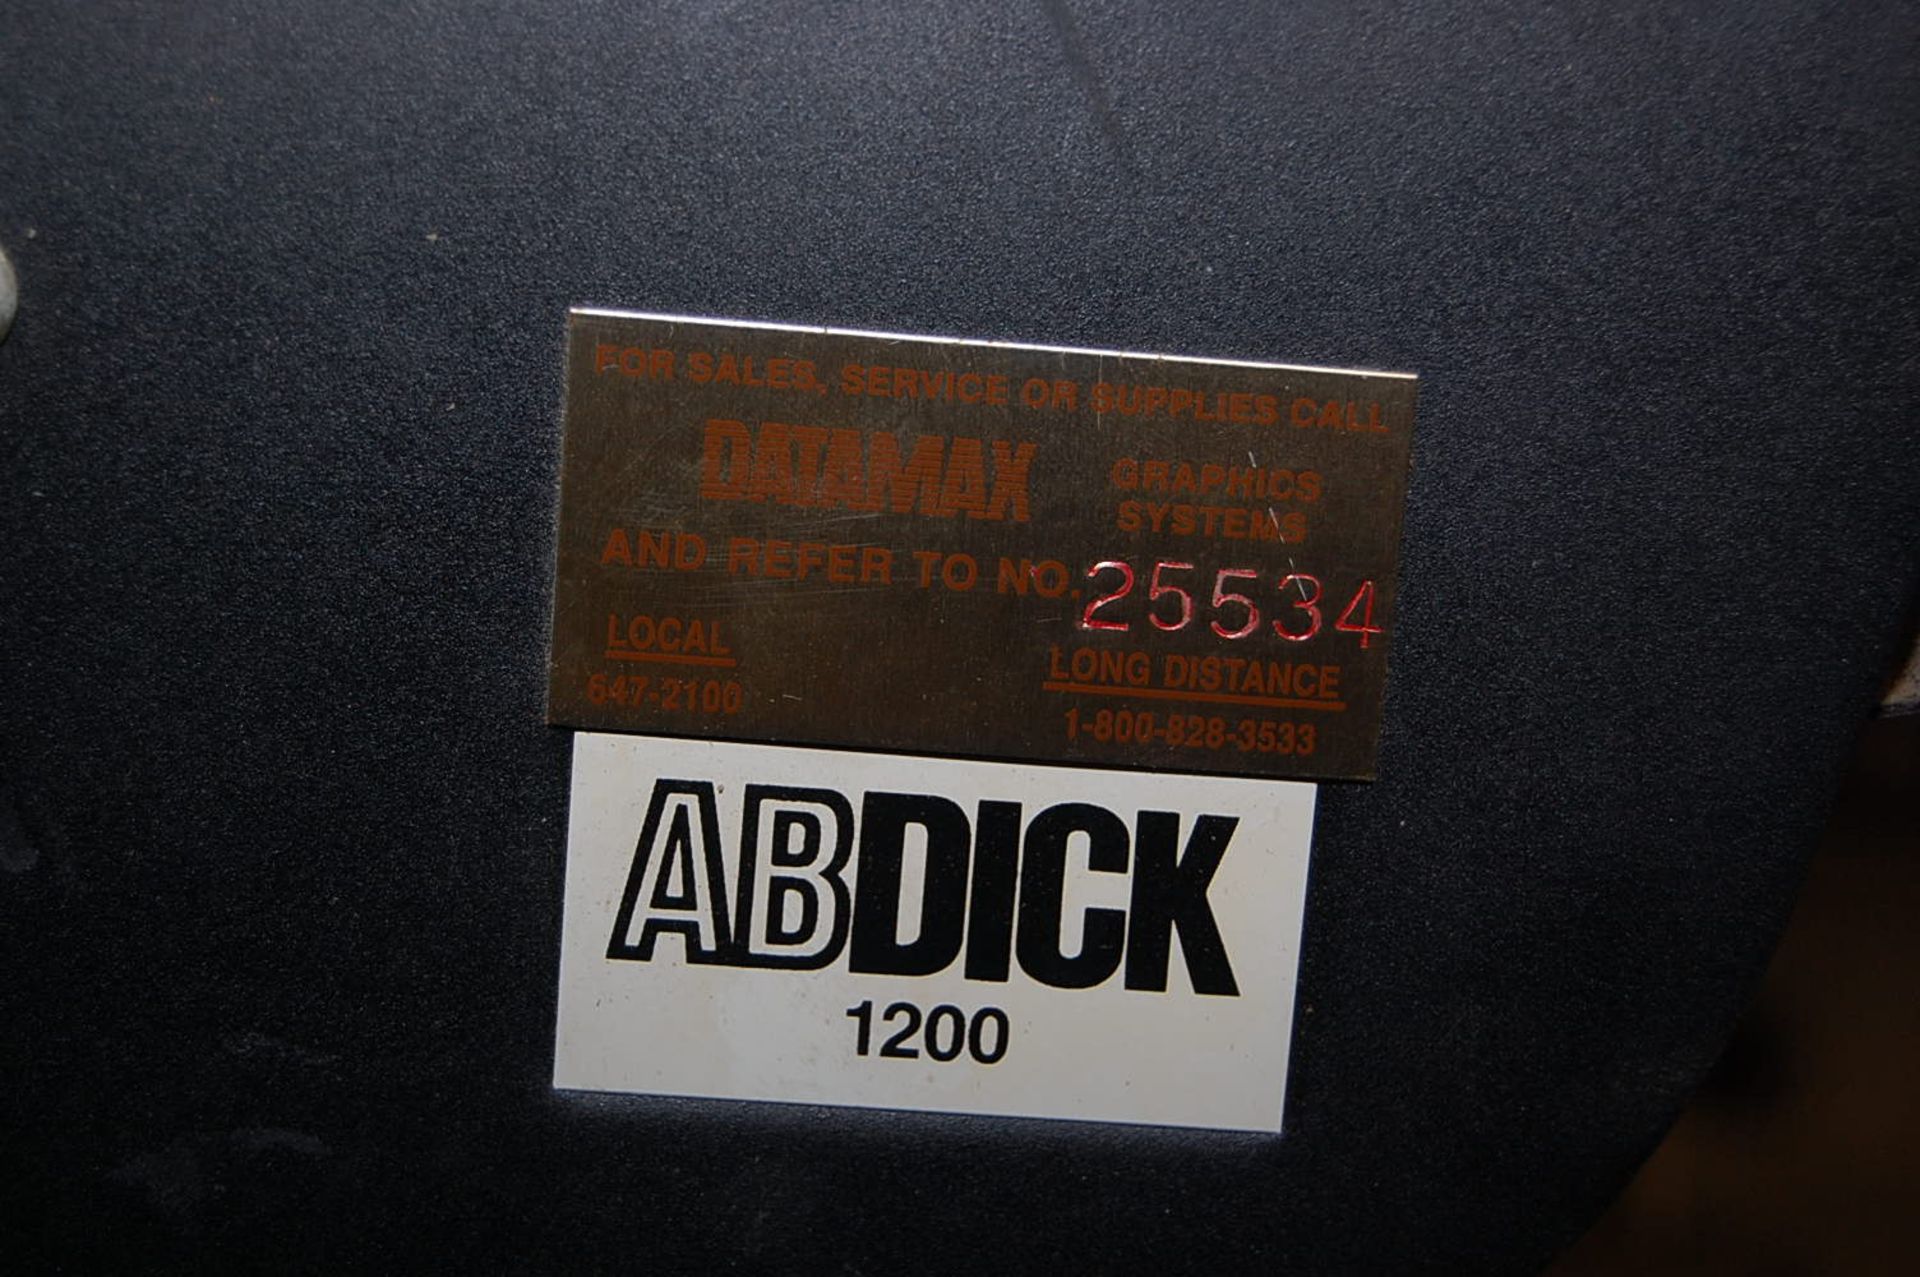 Data Max/AB Dick 1200 Envelope Feeder, Stand, Vacuum Pump, SN 25534 - Image 2 of 2